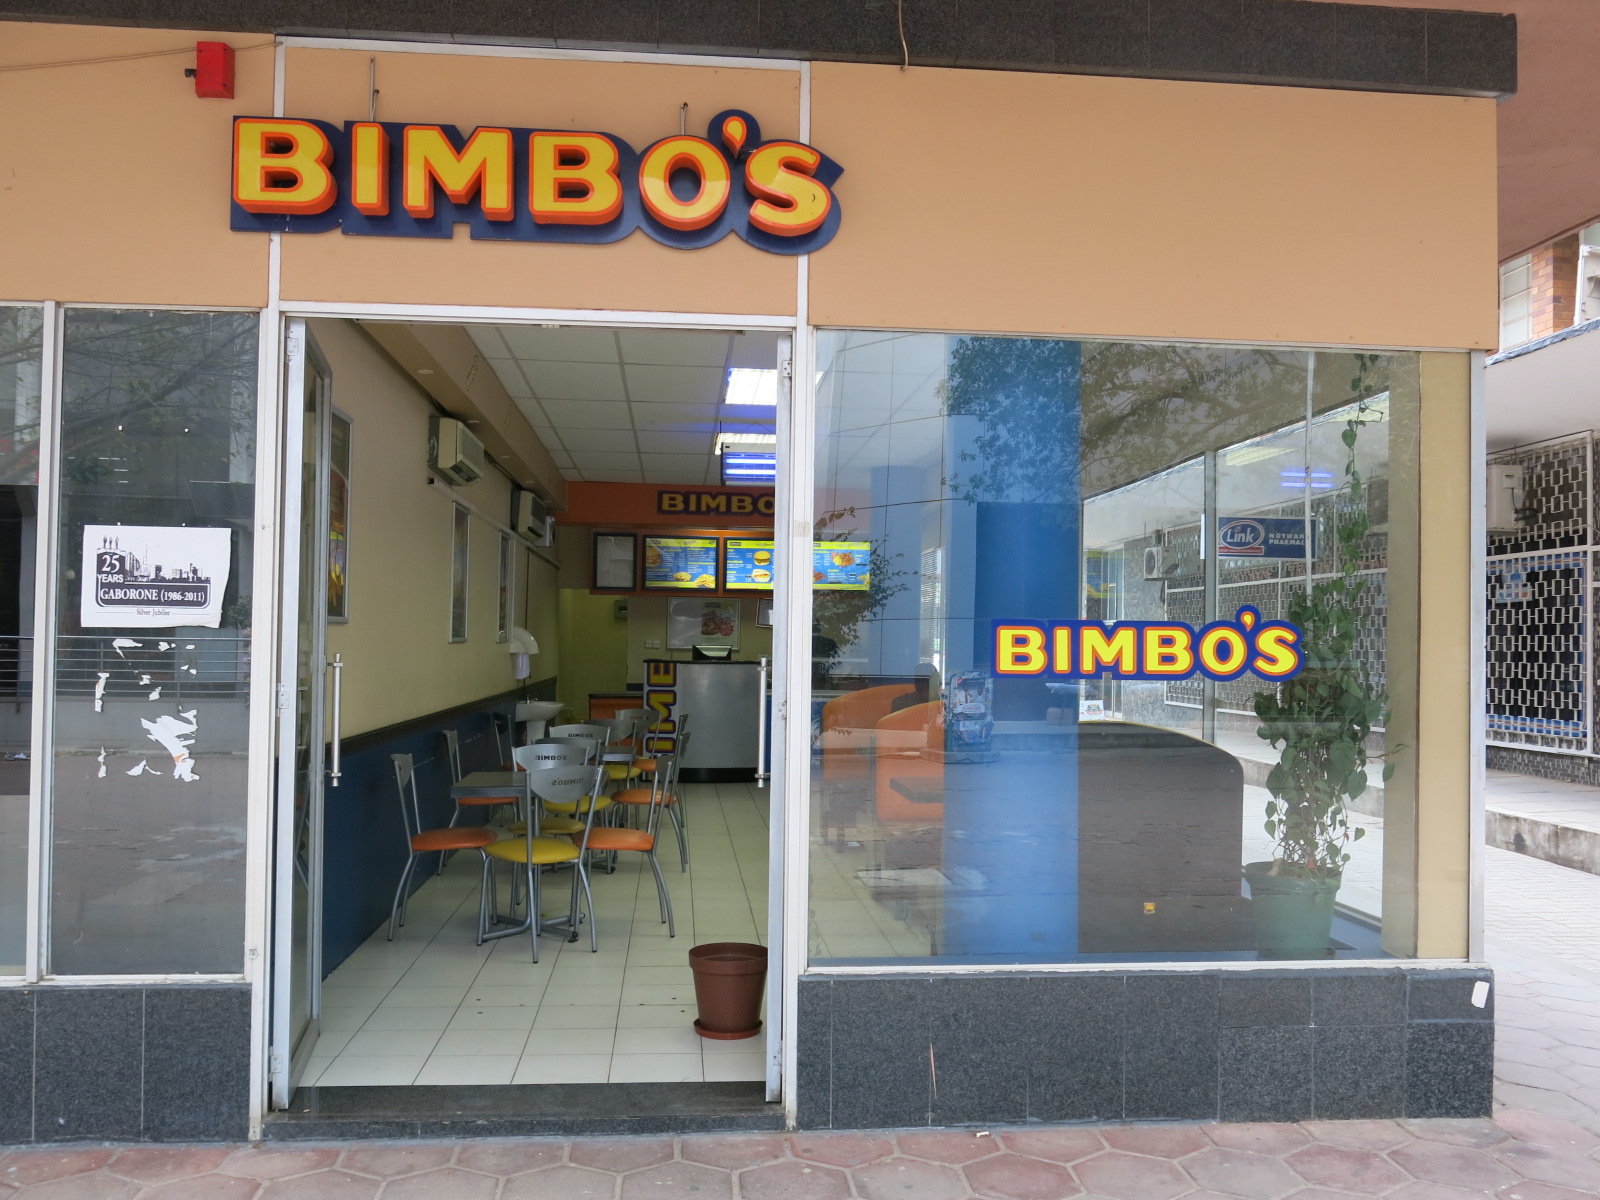 Gaborone Bimbos fast food